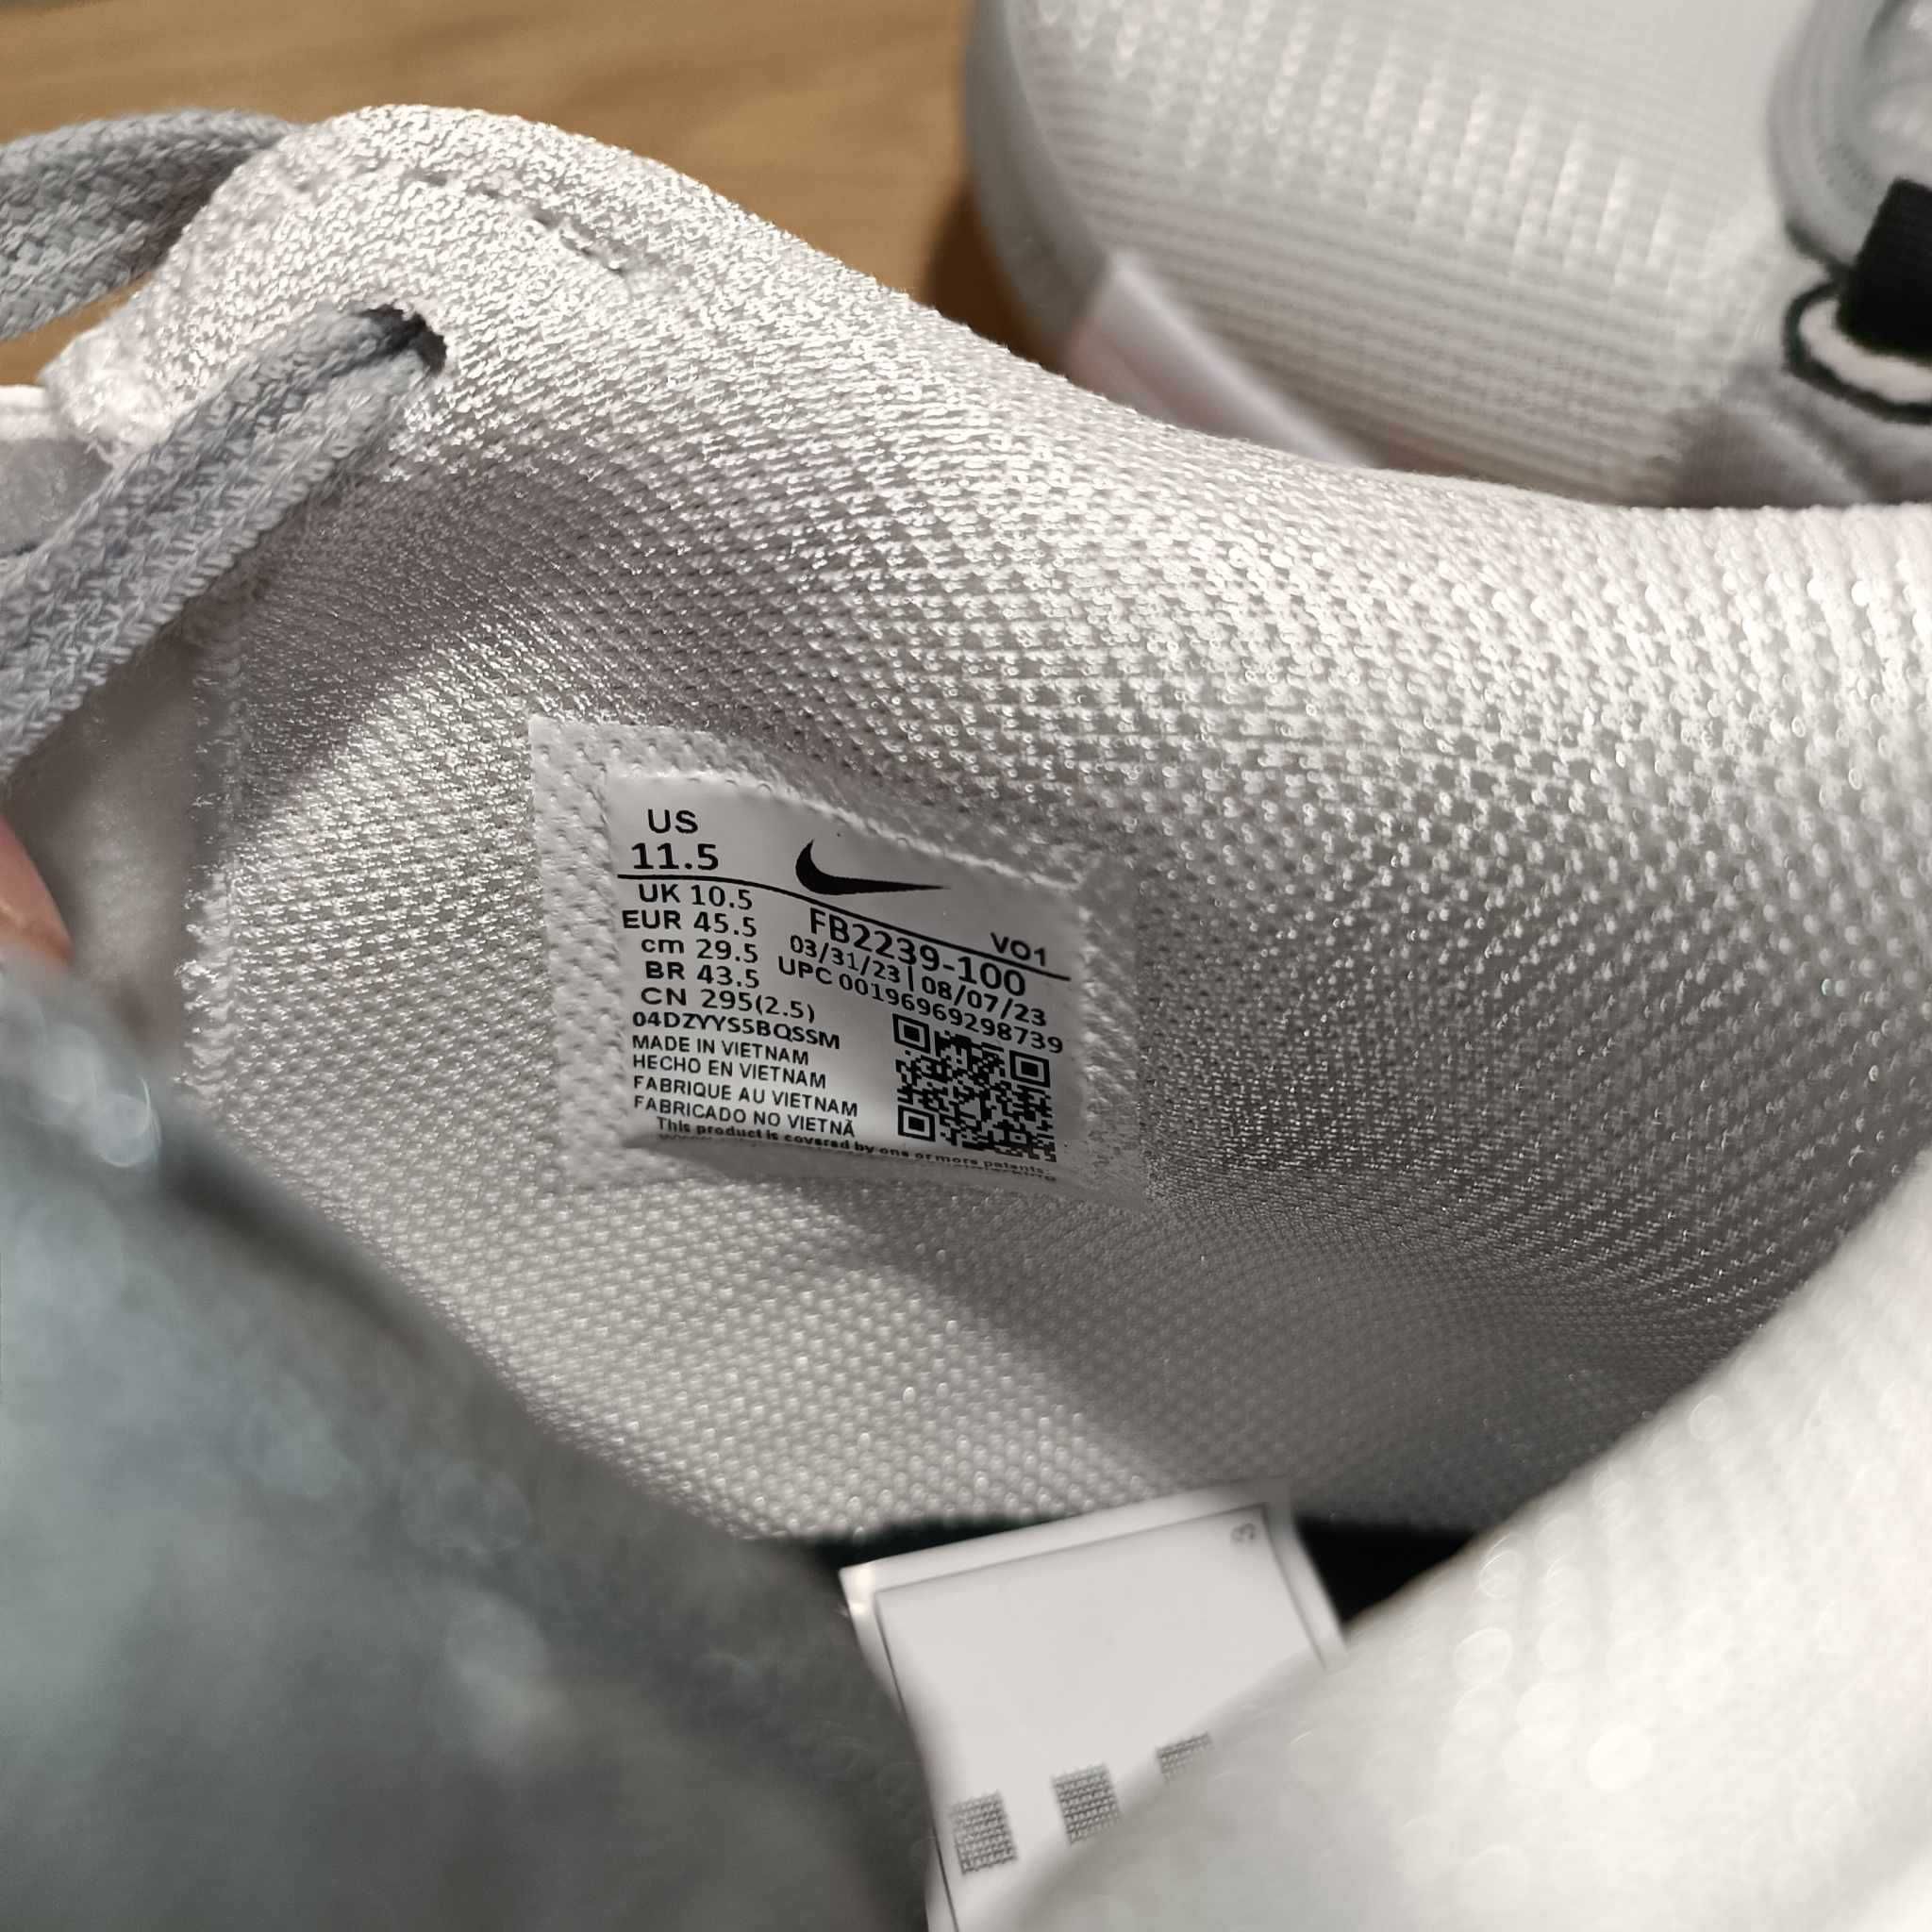 Nike LeBron Witness VIII r. 45,5 (29,5 cm) White/Black-LT Smoke Grey